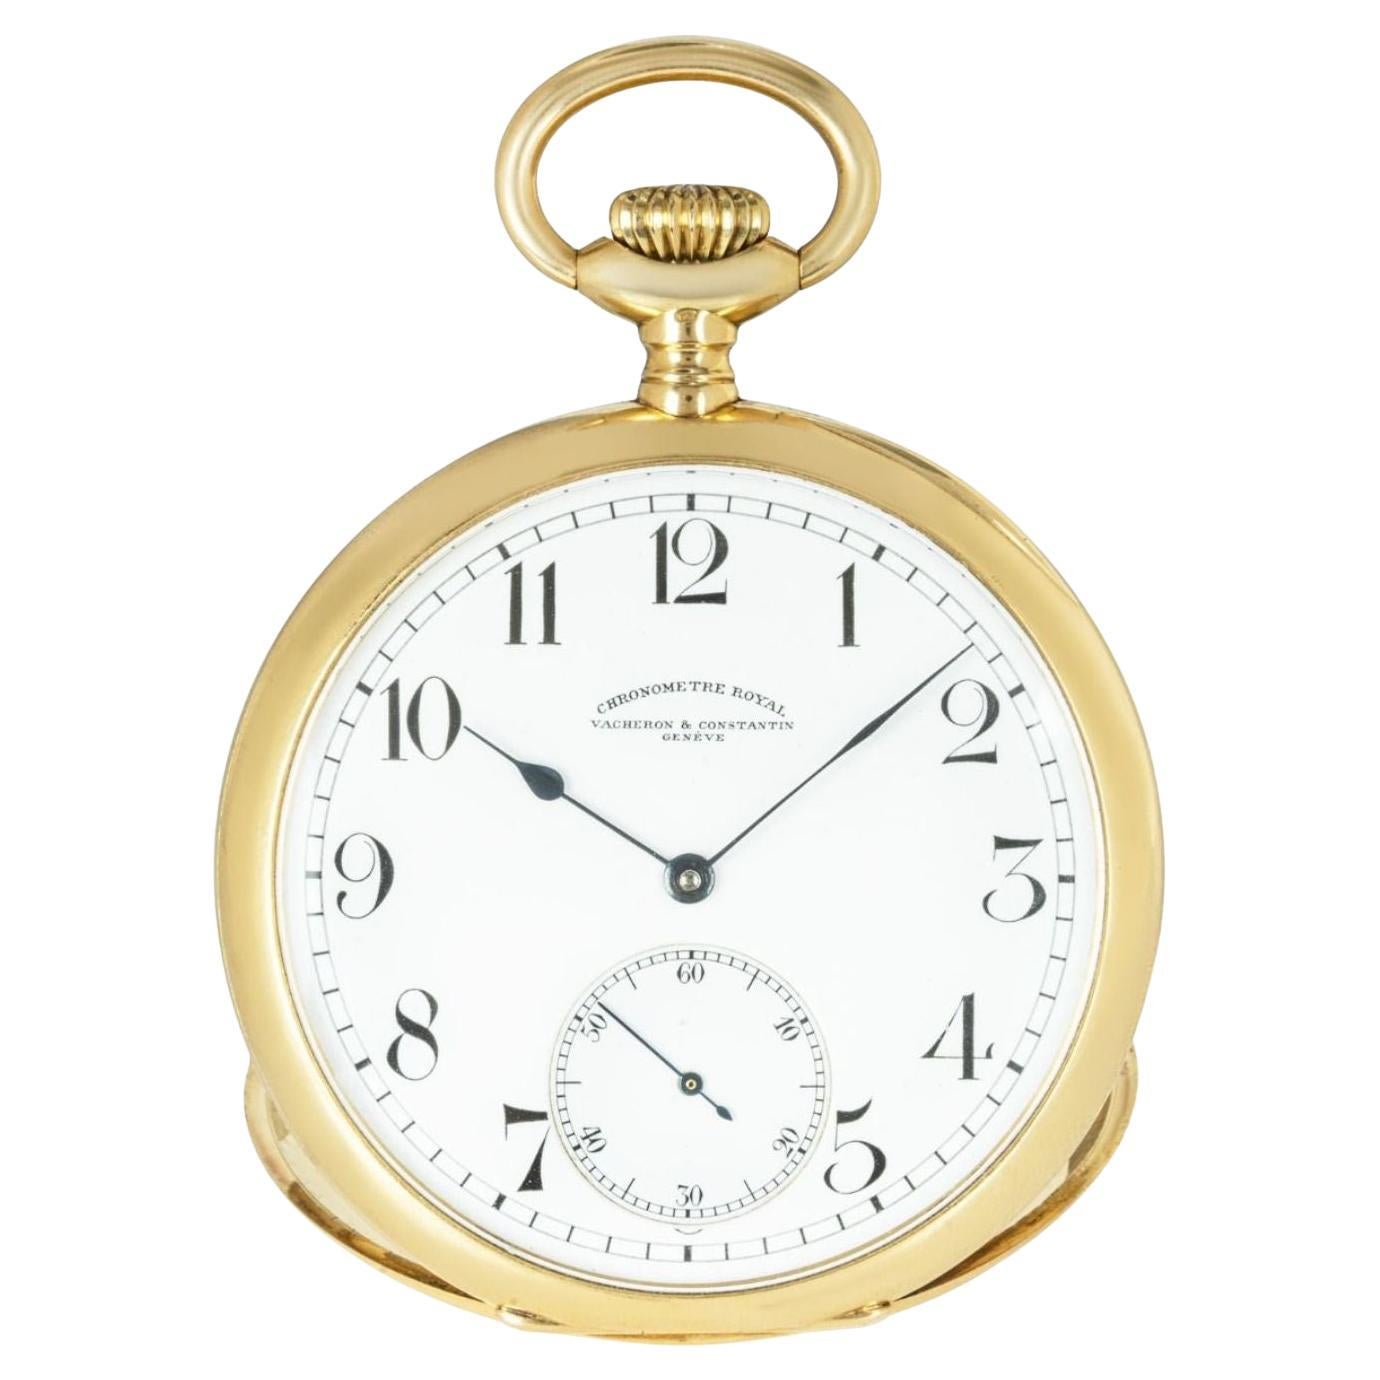 Vacheron Constantin Chronometer Royal 18ct Gold Keyless Lever Pocket Watch C1920